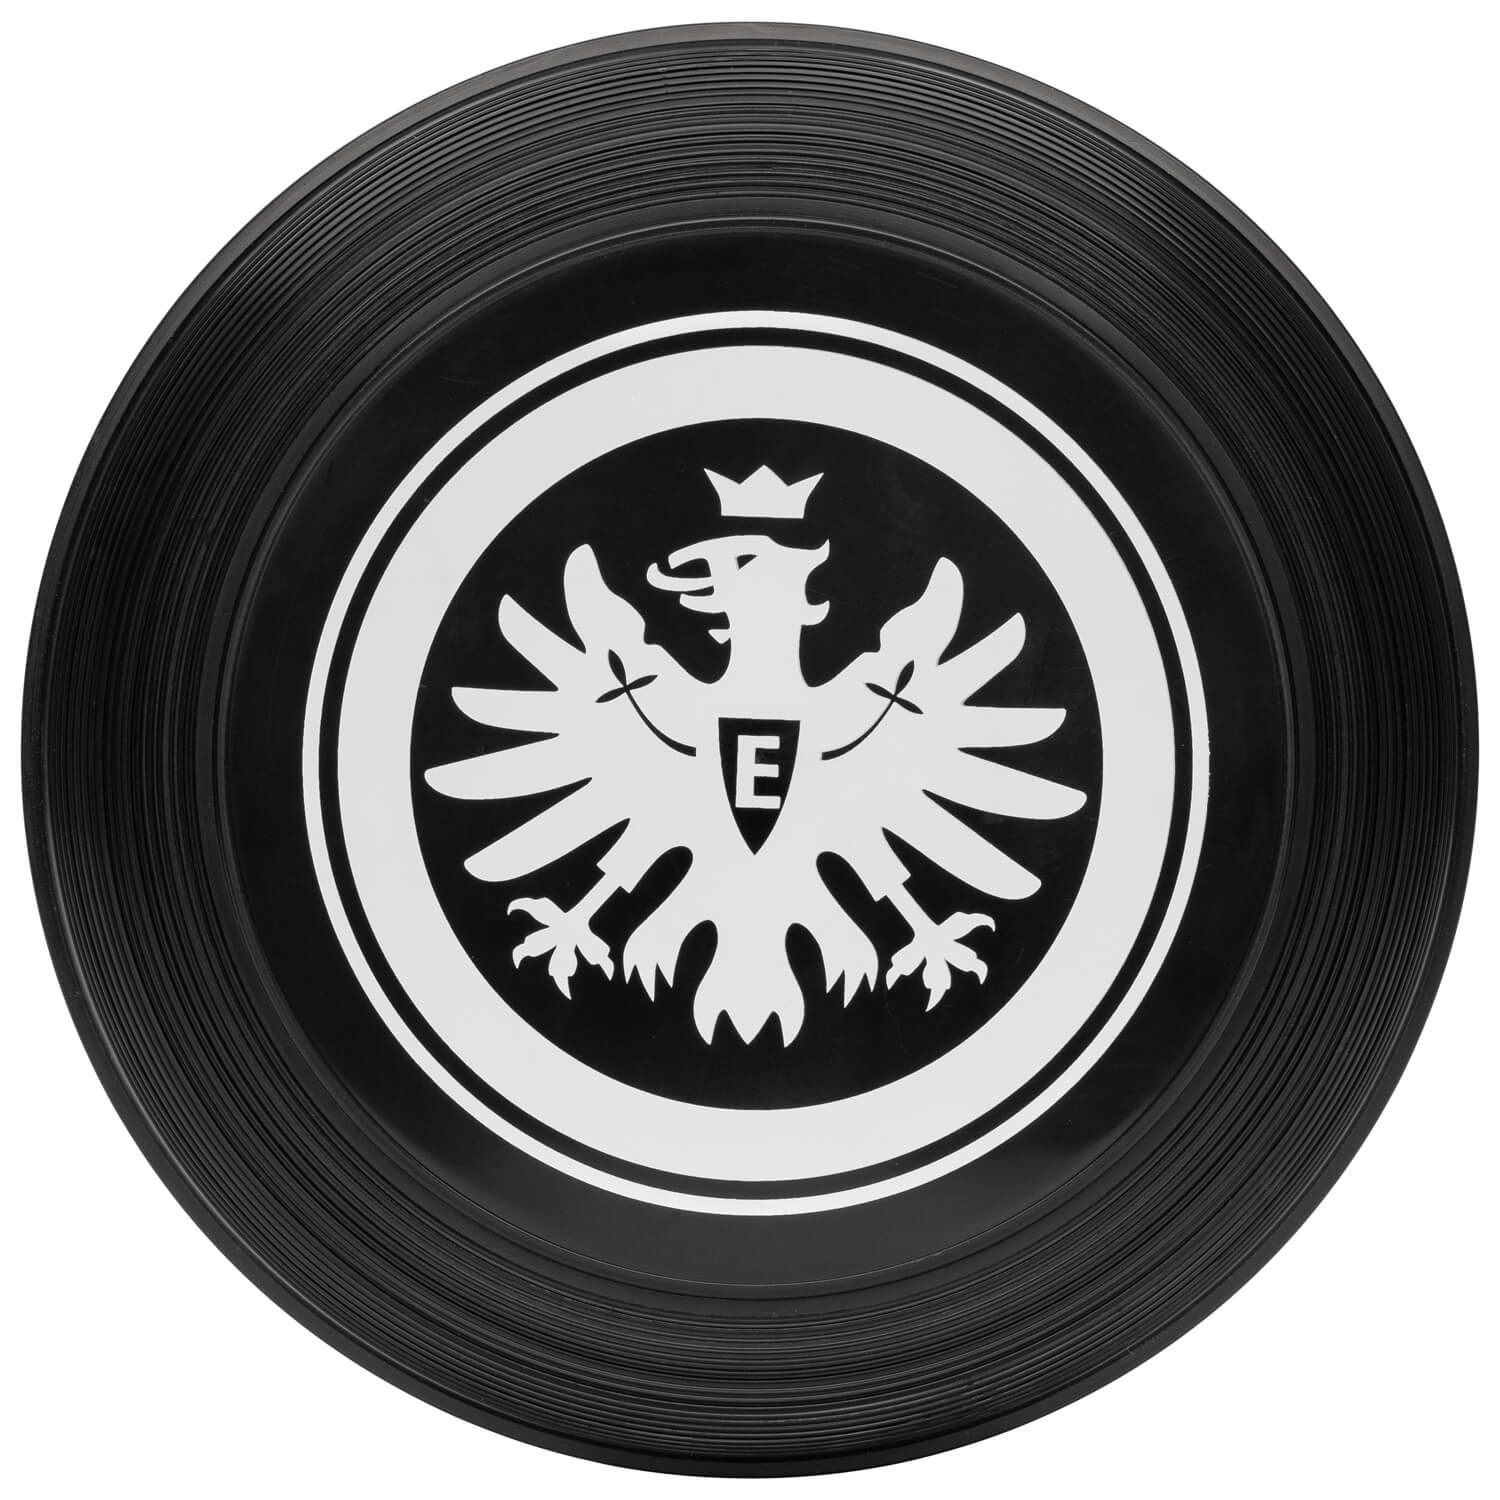 Bild 1: Frisbee schwarz